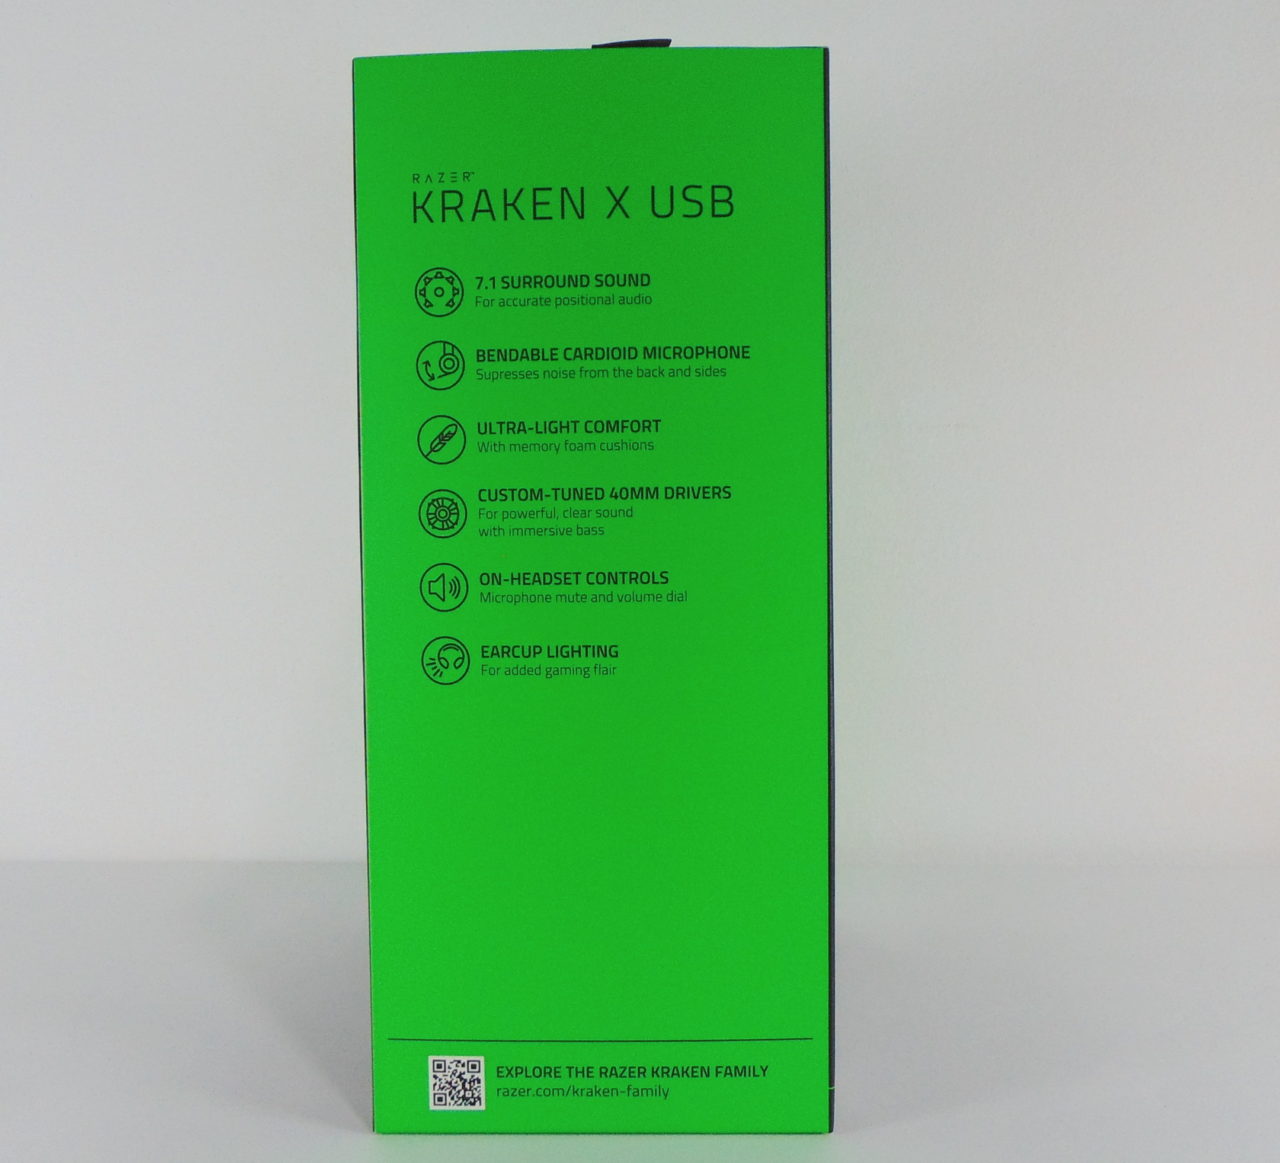 3 Razer Kraken X USB review